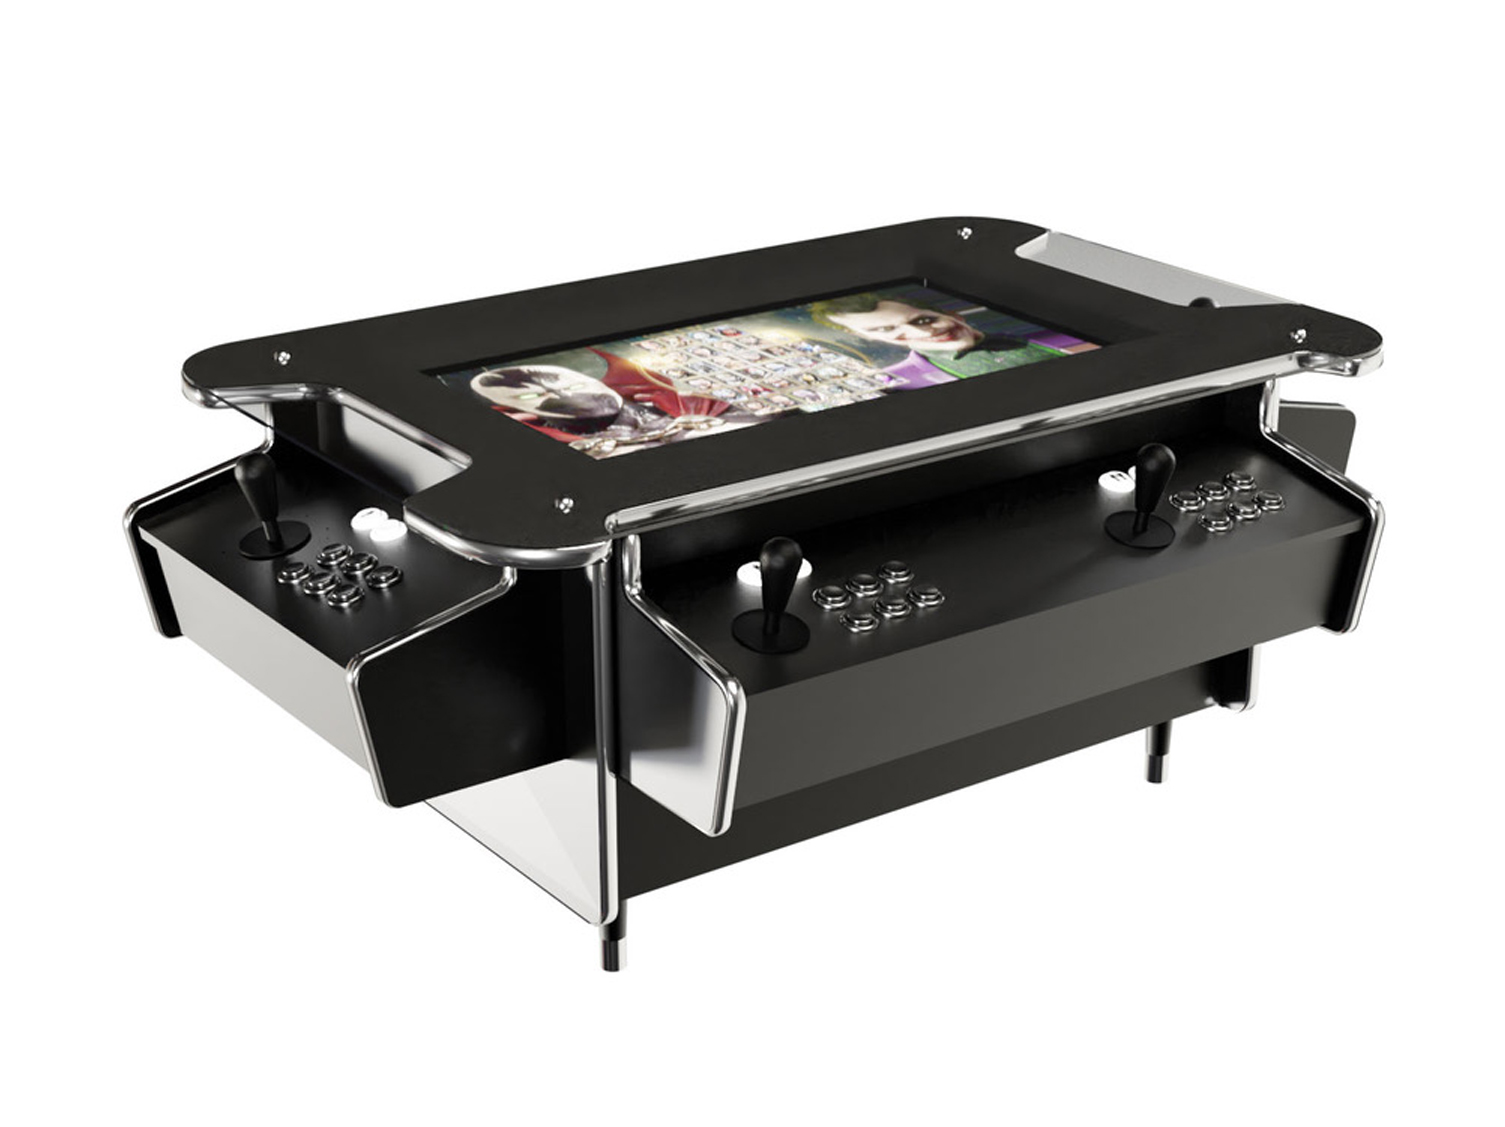 Synergy X Coffee Table Arcade Machine - Black Finish - 1